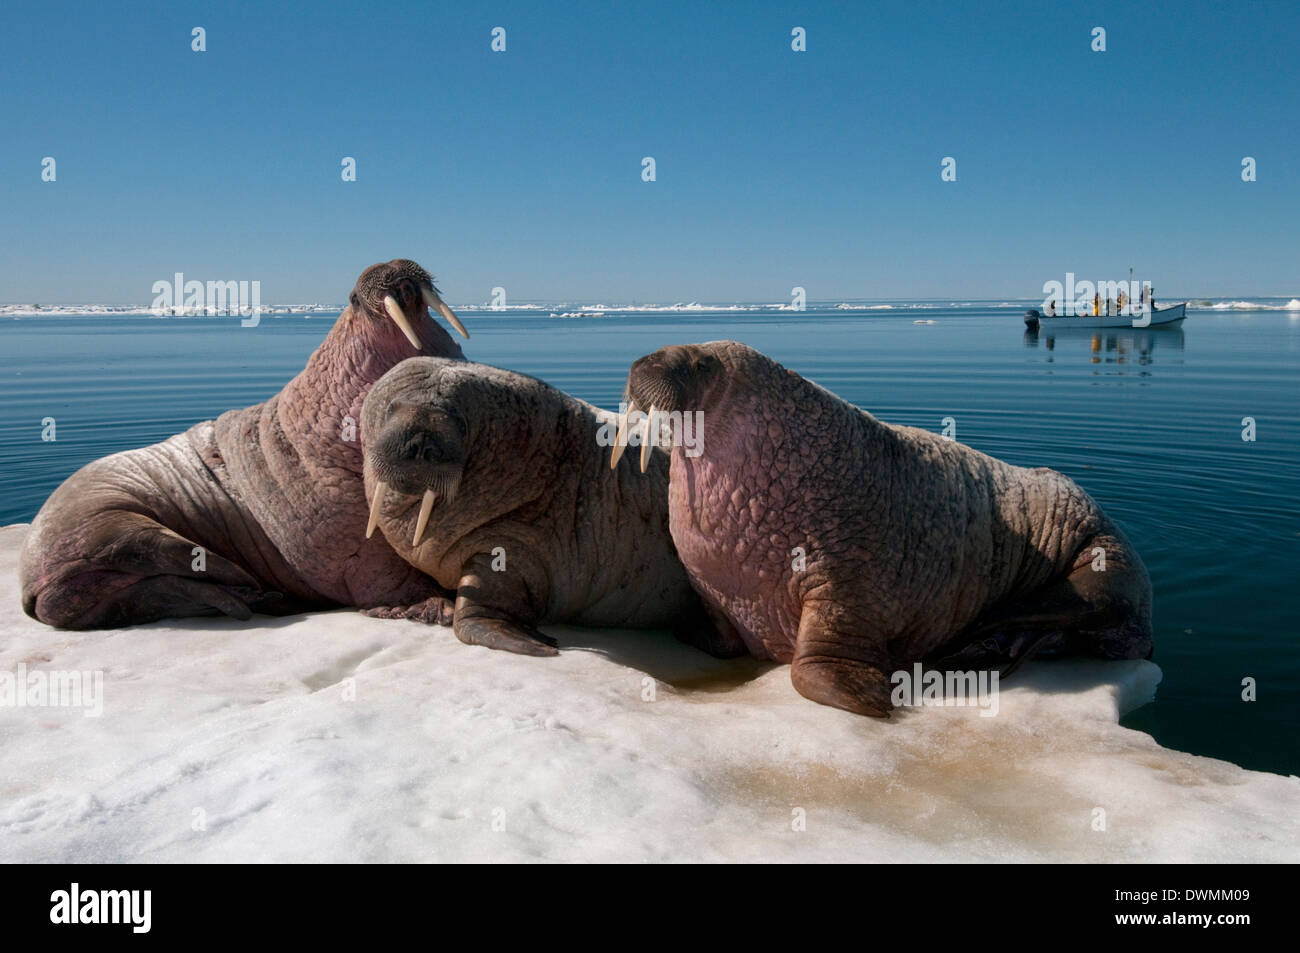 Walrus (Odobenus rosmarus) hauled out on pack ice to rest and sunbathe, Foxe Basin, Nunavut, Canada, North America Stock Photo